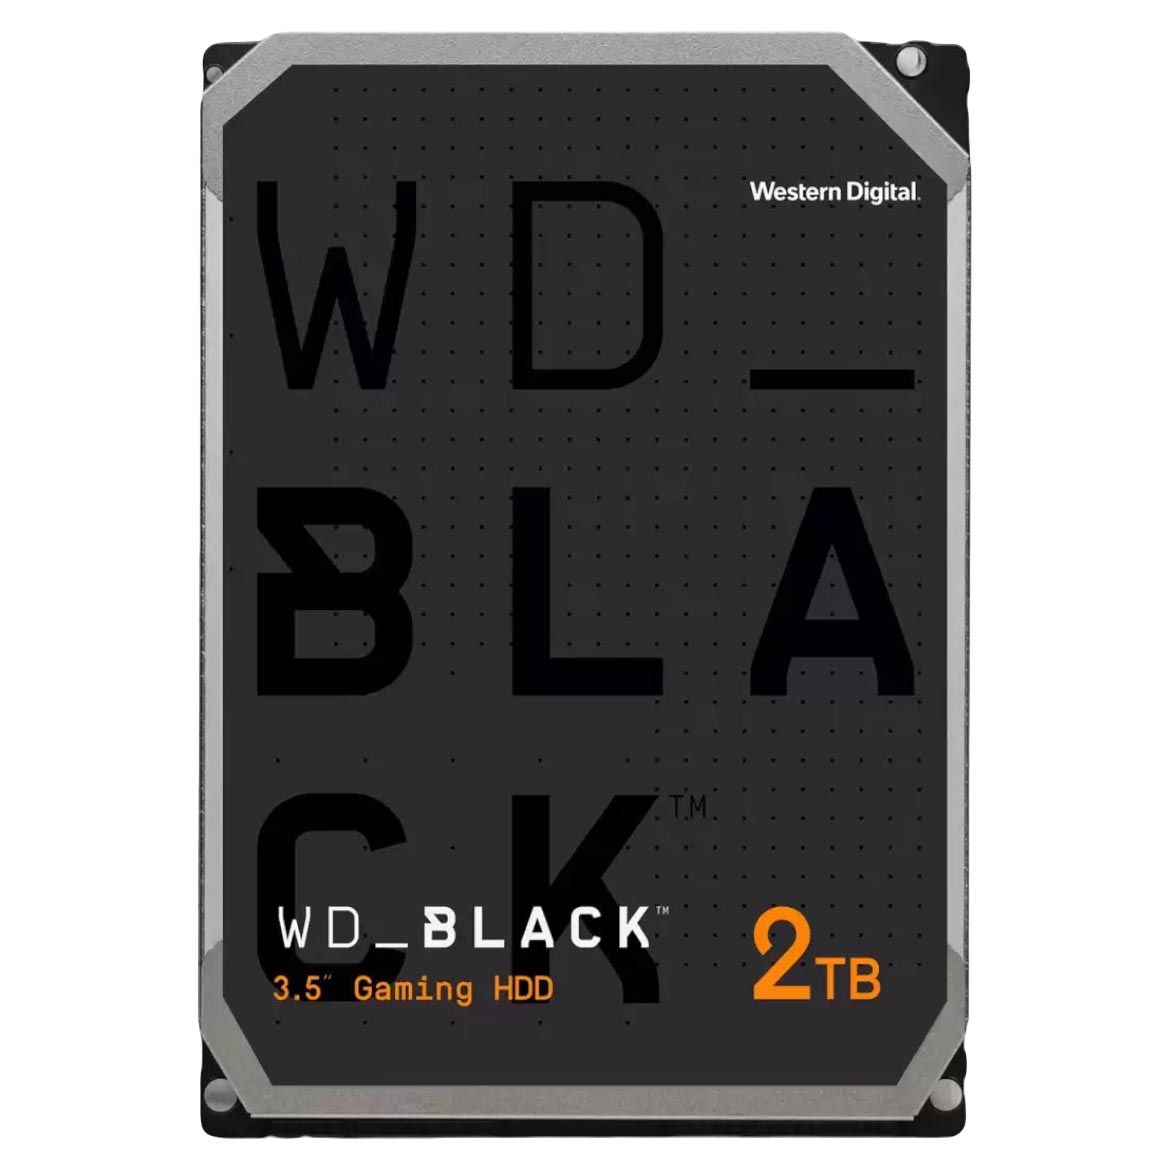 Внутренний жесткий диск Western Digital WD Black Gaming, WD2003FZEX, 2 Тб внутренний жесткий диск western digital gold 3 5 8 тб wd8004fryz